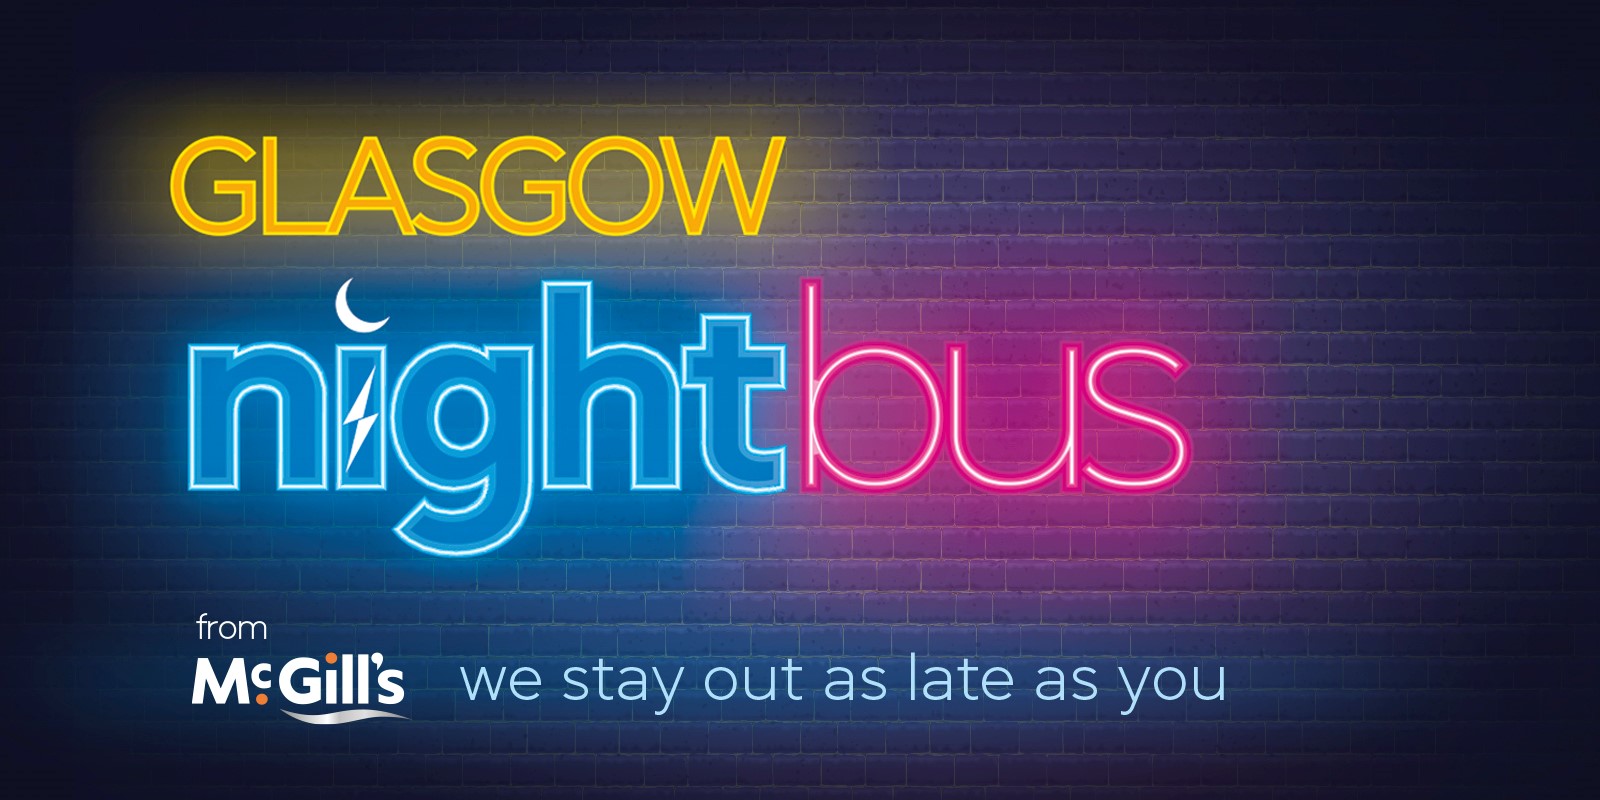 McGill's Glasgow Night bus